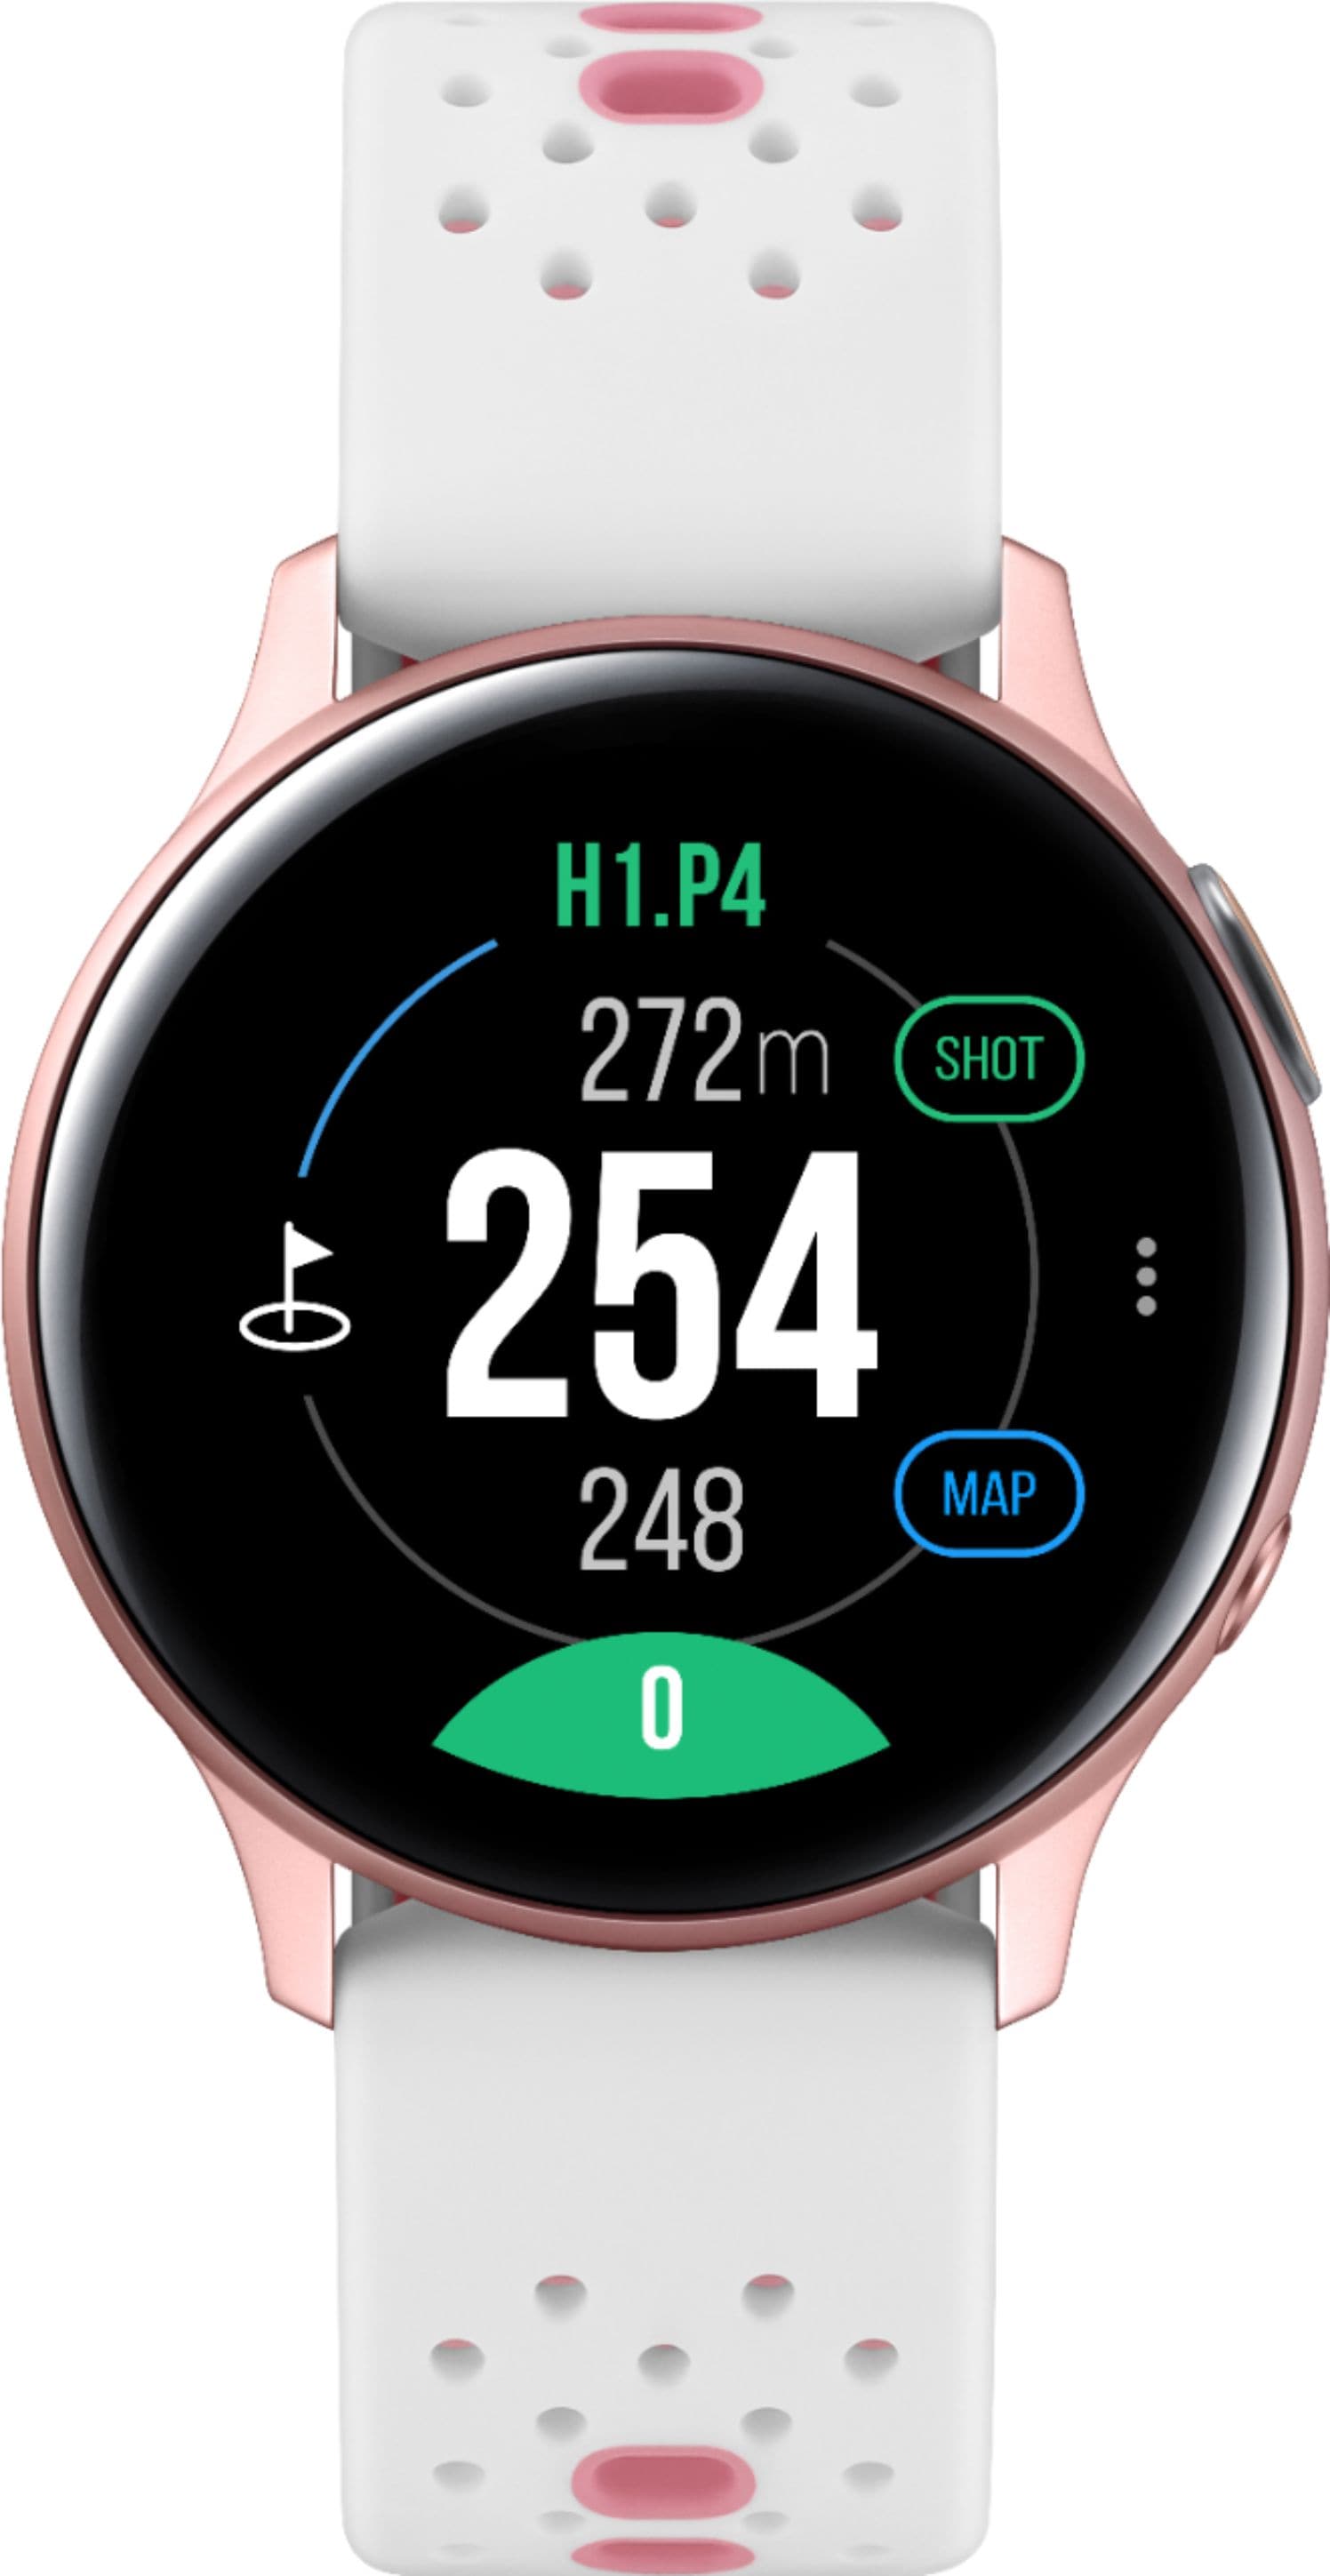 Samsung Galaxy Watch Active2 Golf Edition 40mm $120.99 + Free Shipping @ BestBuy